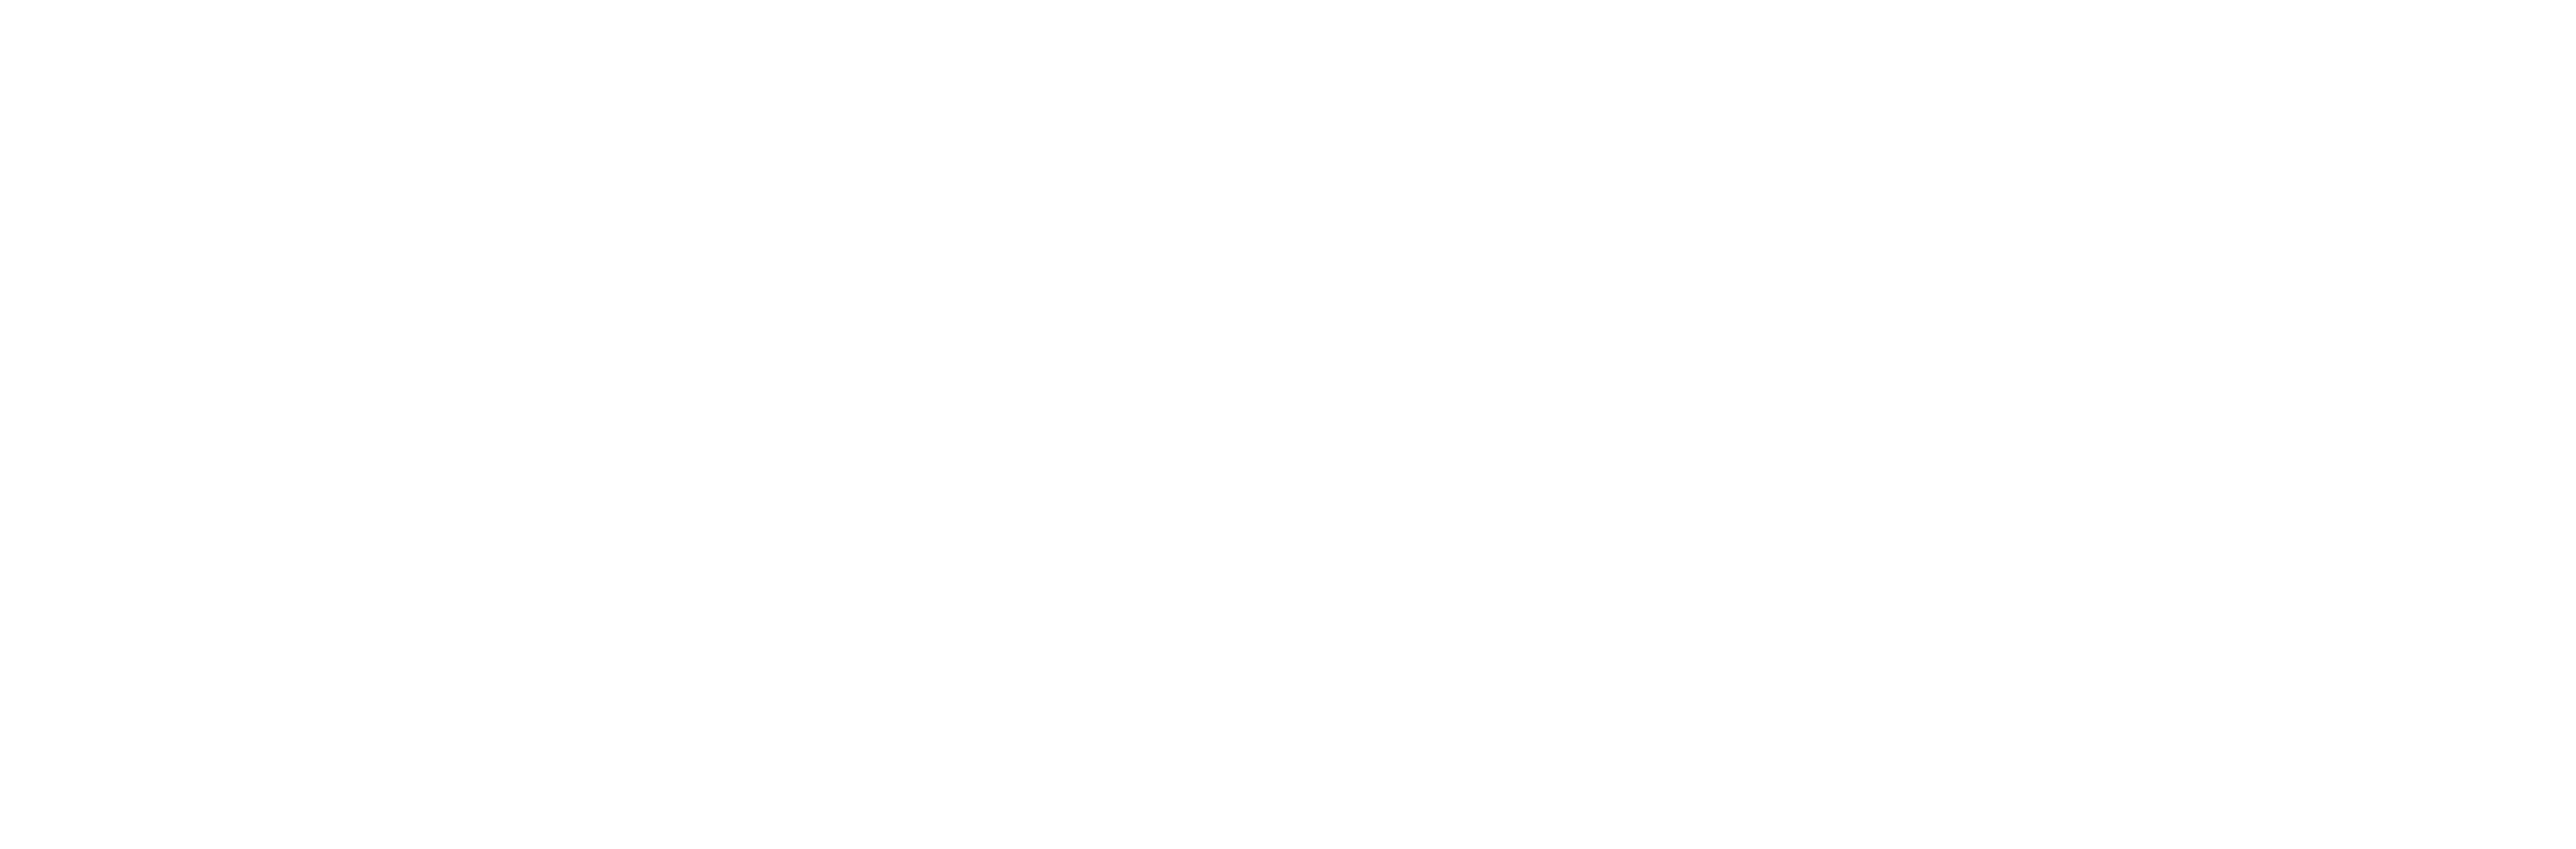 Women's Health Victoria logo